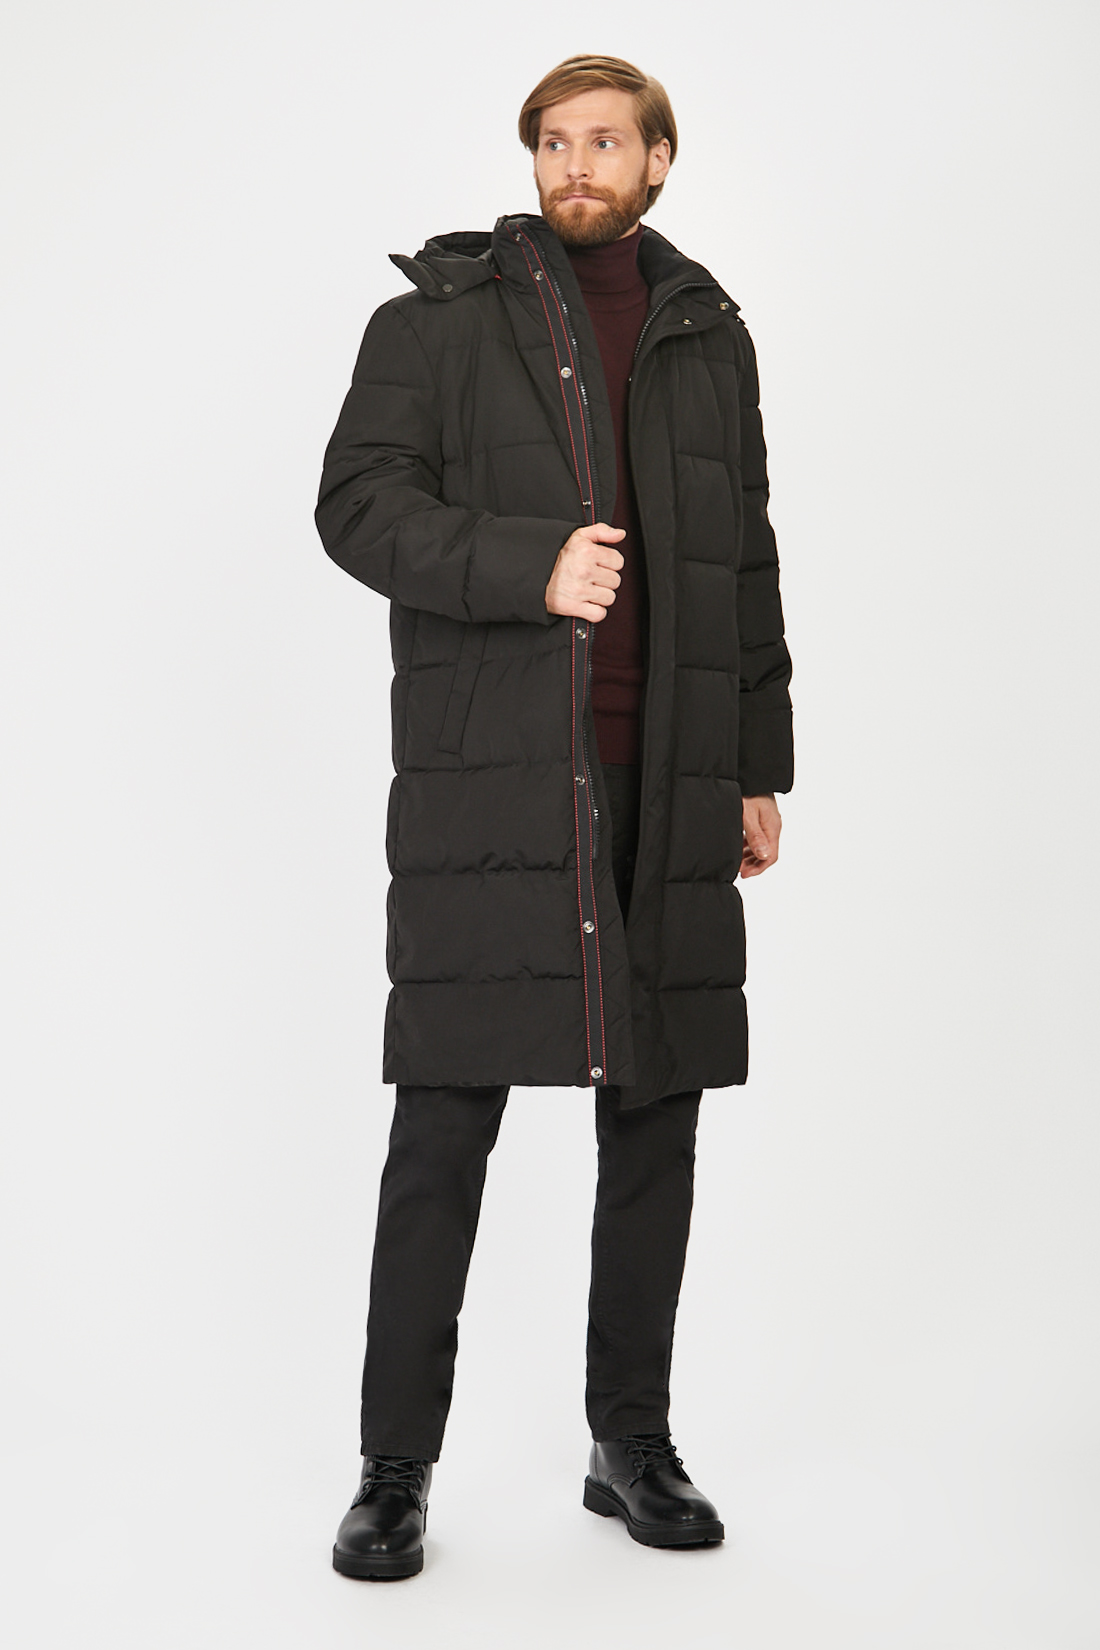 Куртка (Эко пух) (арт. baon B541506), размер M, цвет черный Куртка (Эко пух) (арт. baon B541506) - фото 7